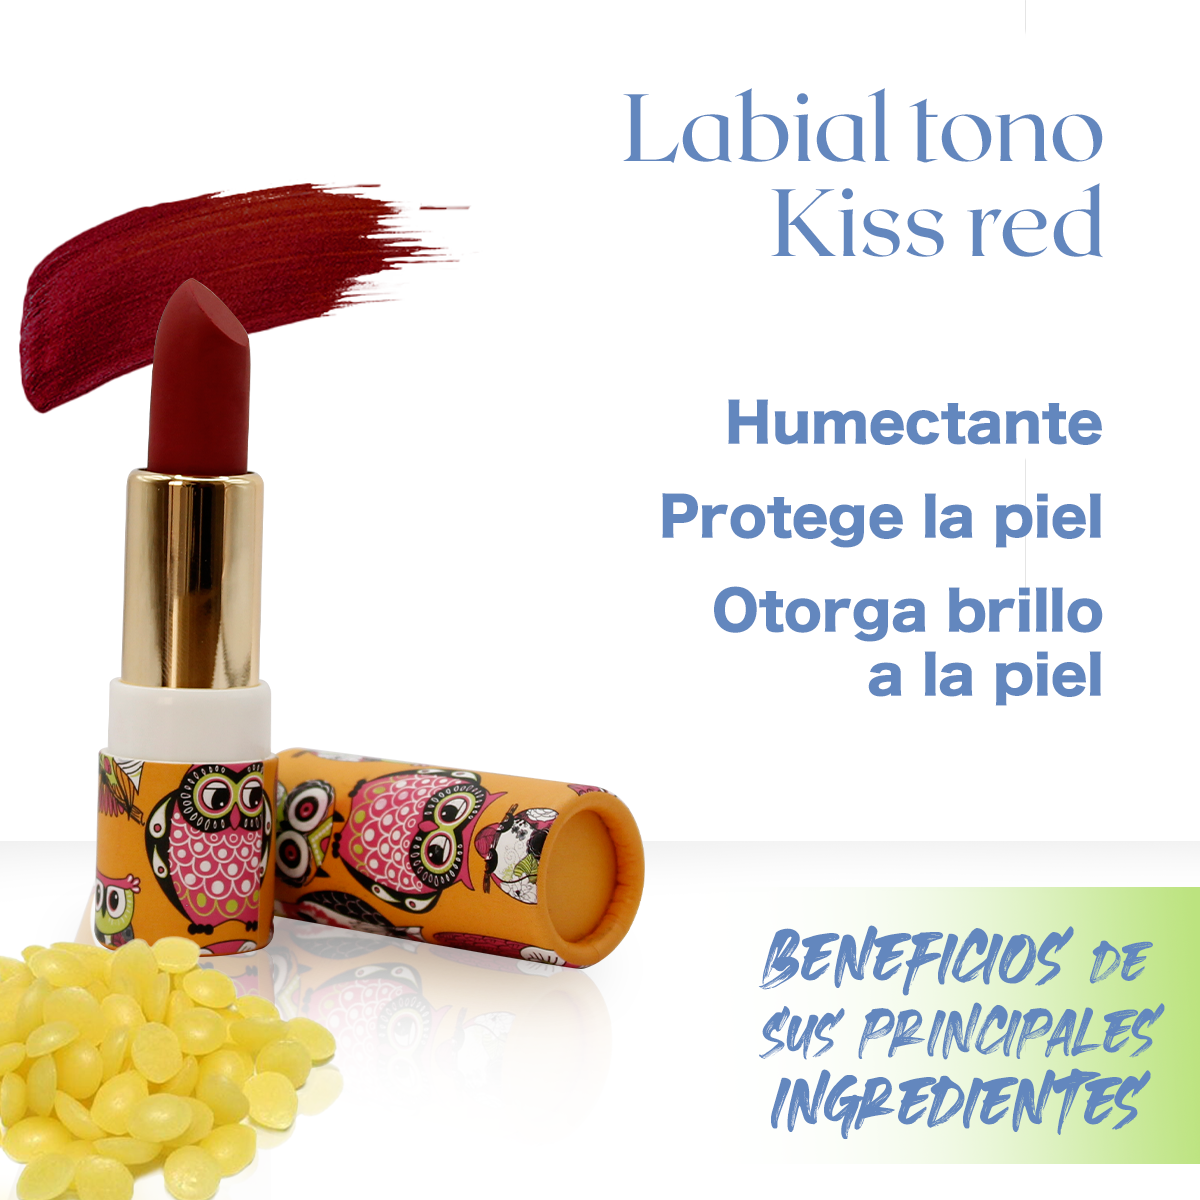 Labial hidratante natural de cera de candelilla, manteca de karite, vitamina E y pigmentos naturales 6g, Tono Kiss red búhos